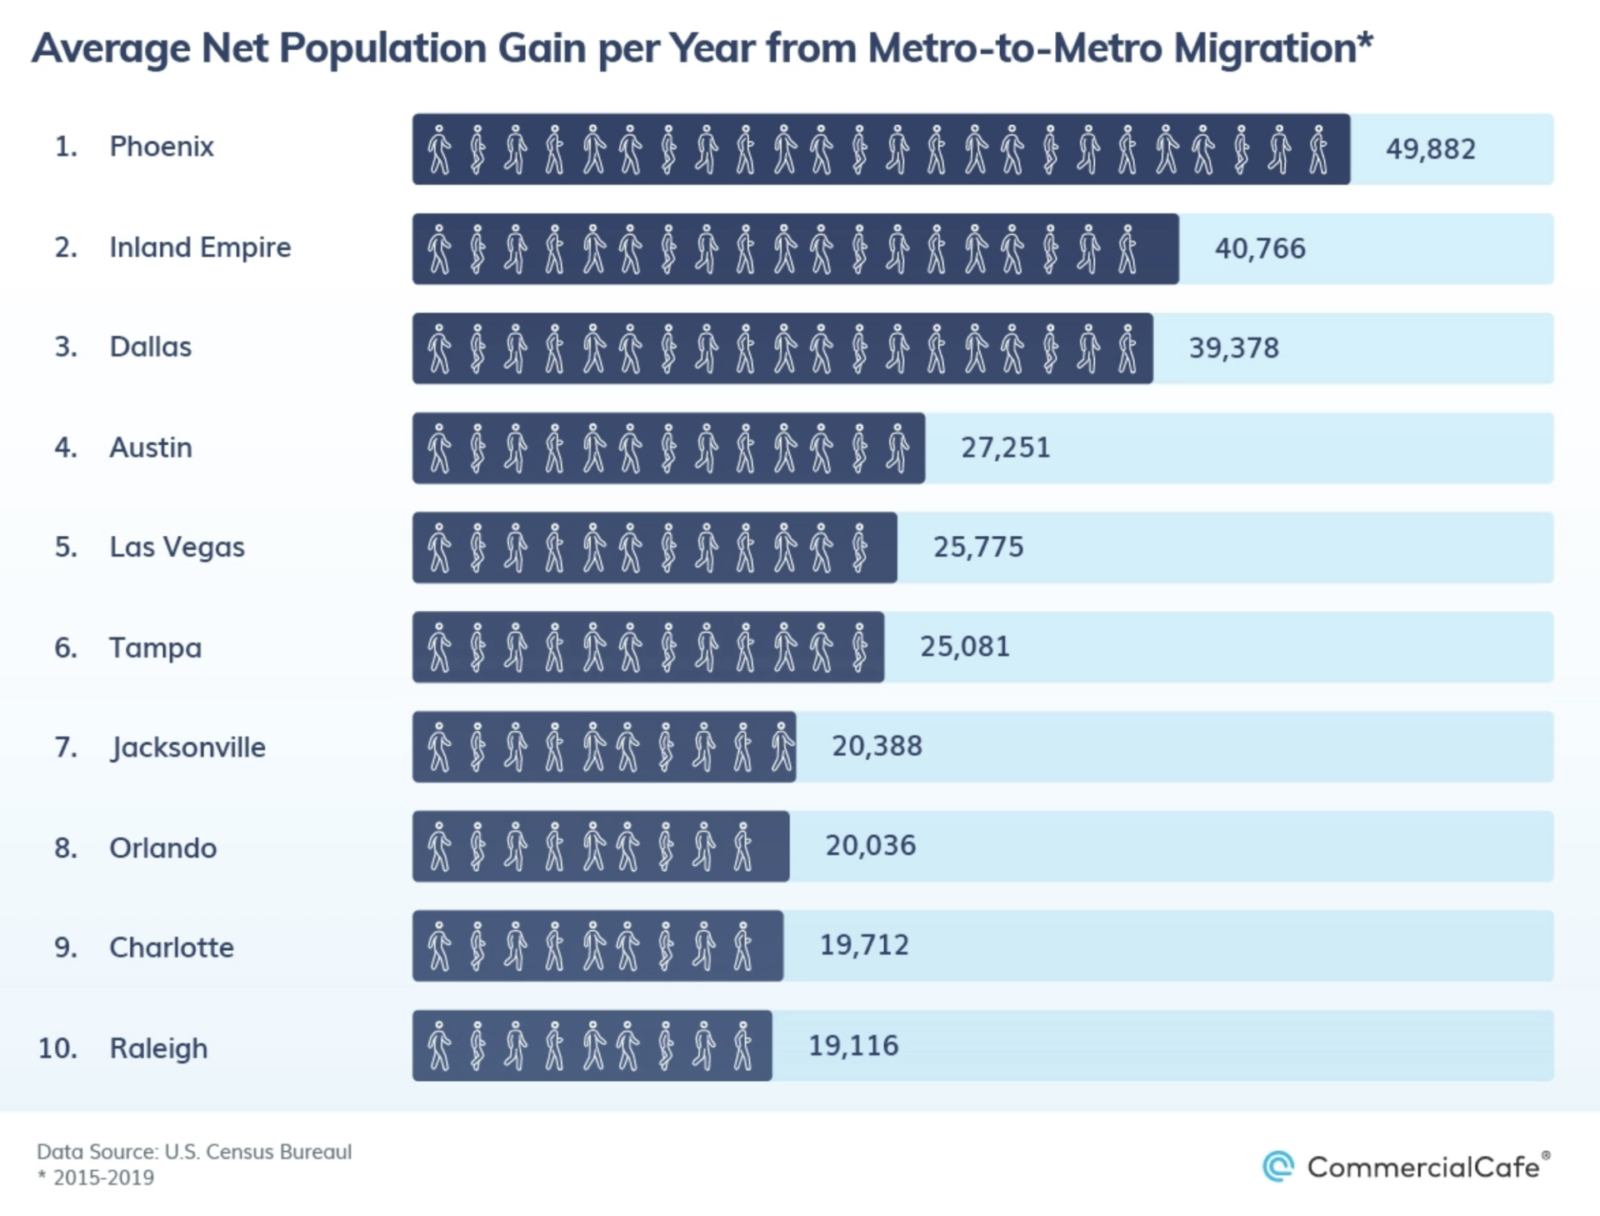 Phoenix No. 1 for metro-to-metro population growth